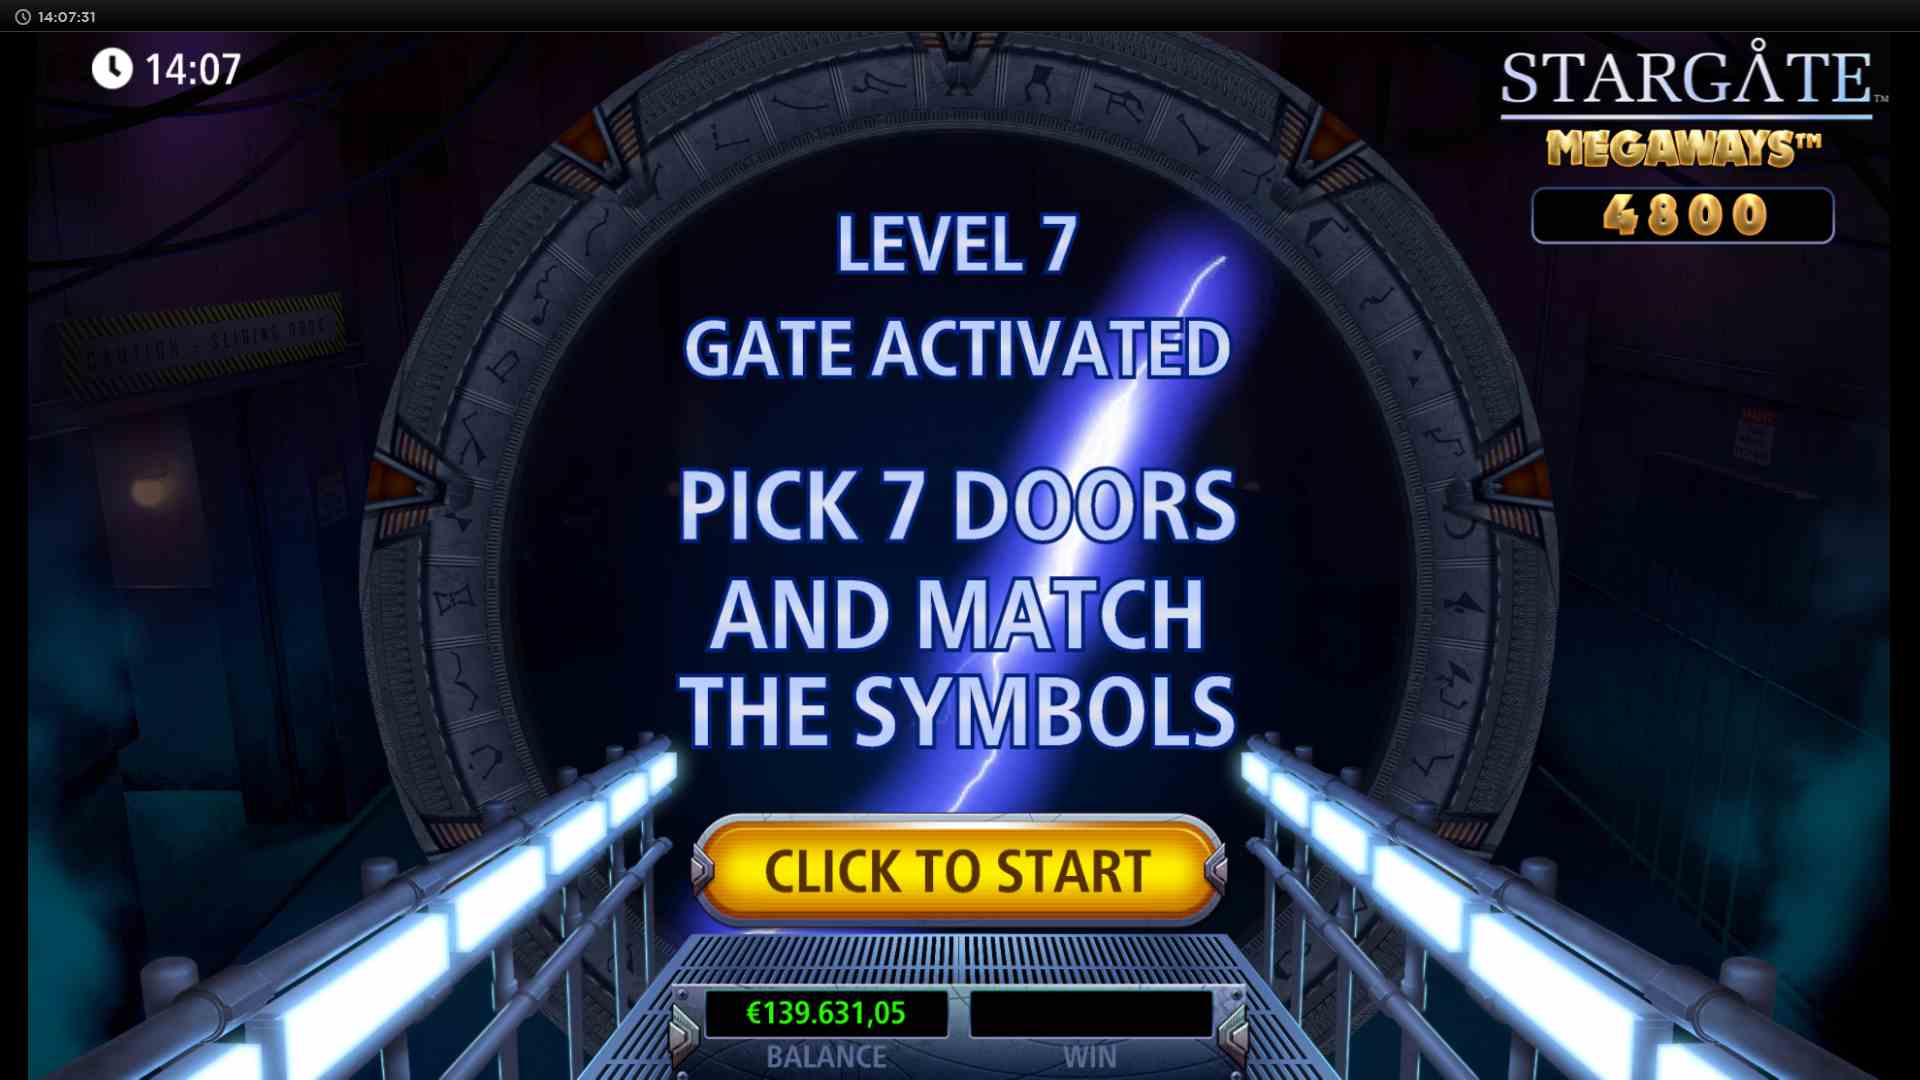 Stargate Megaways Free Spins